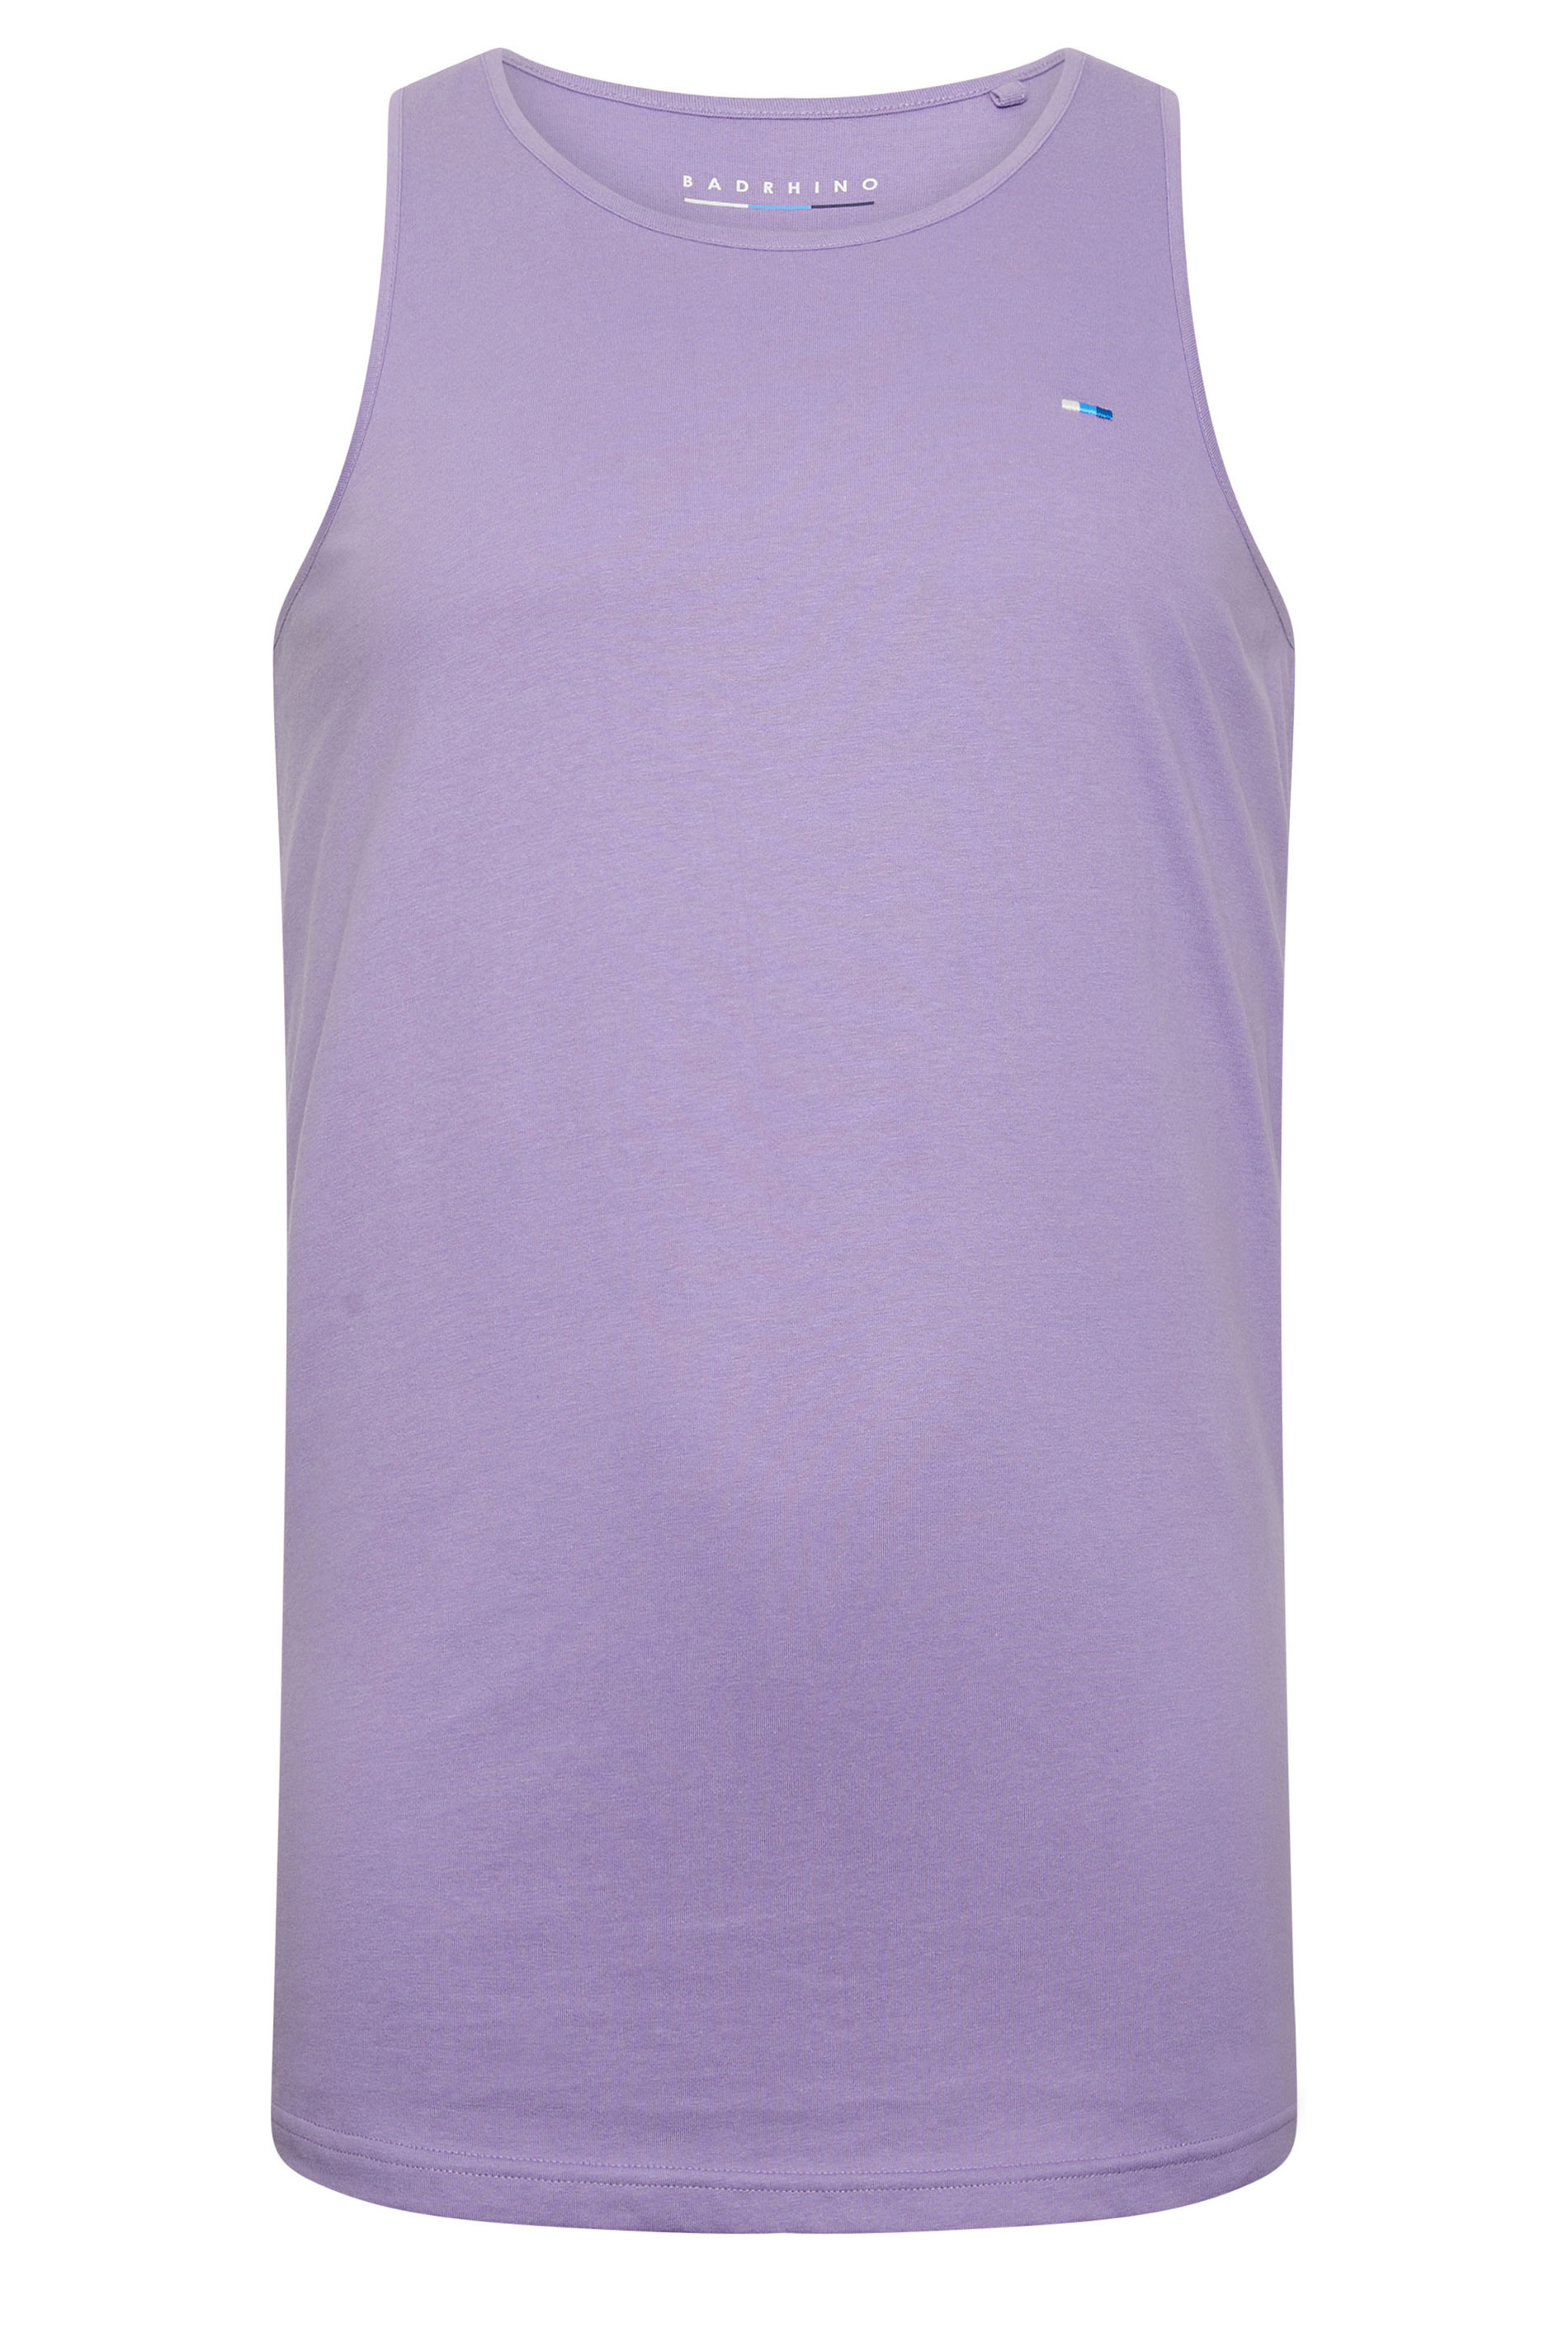 BadRhino Big & Tall Chalk Violet Purple Vest | BadRhino 2